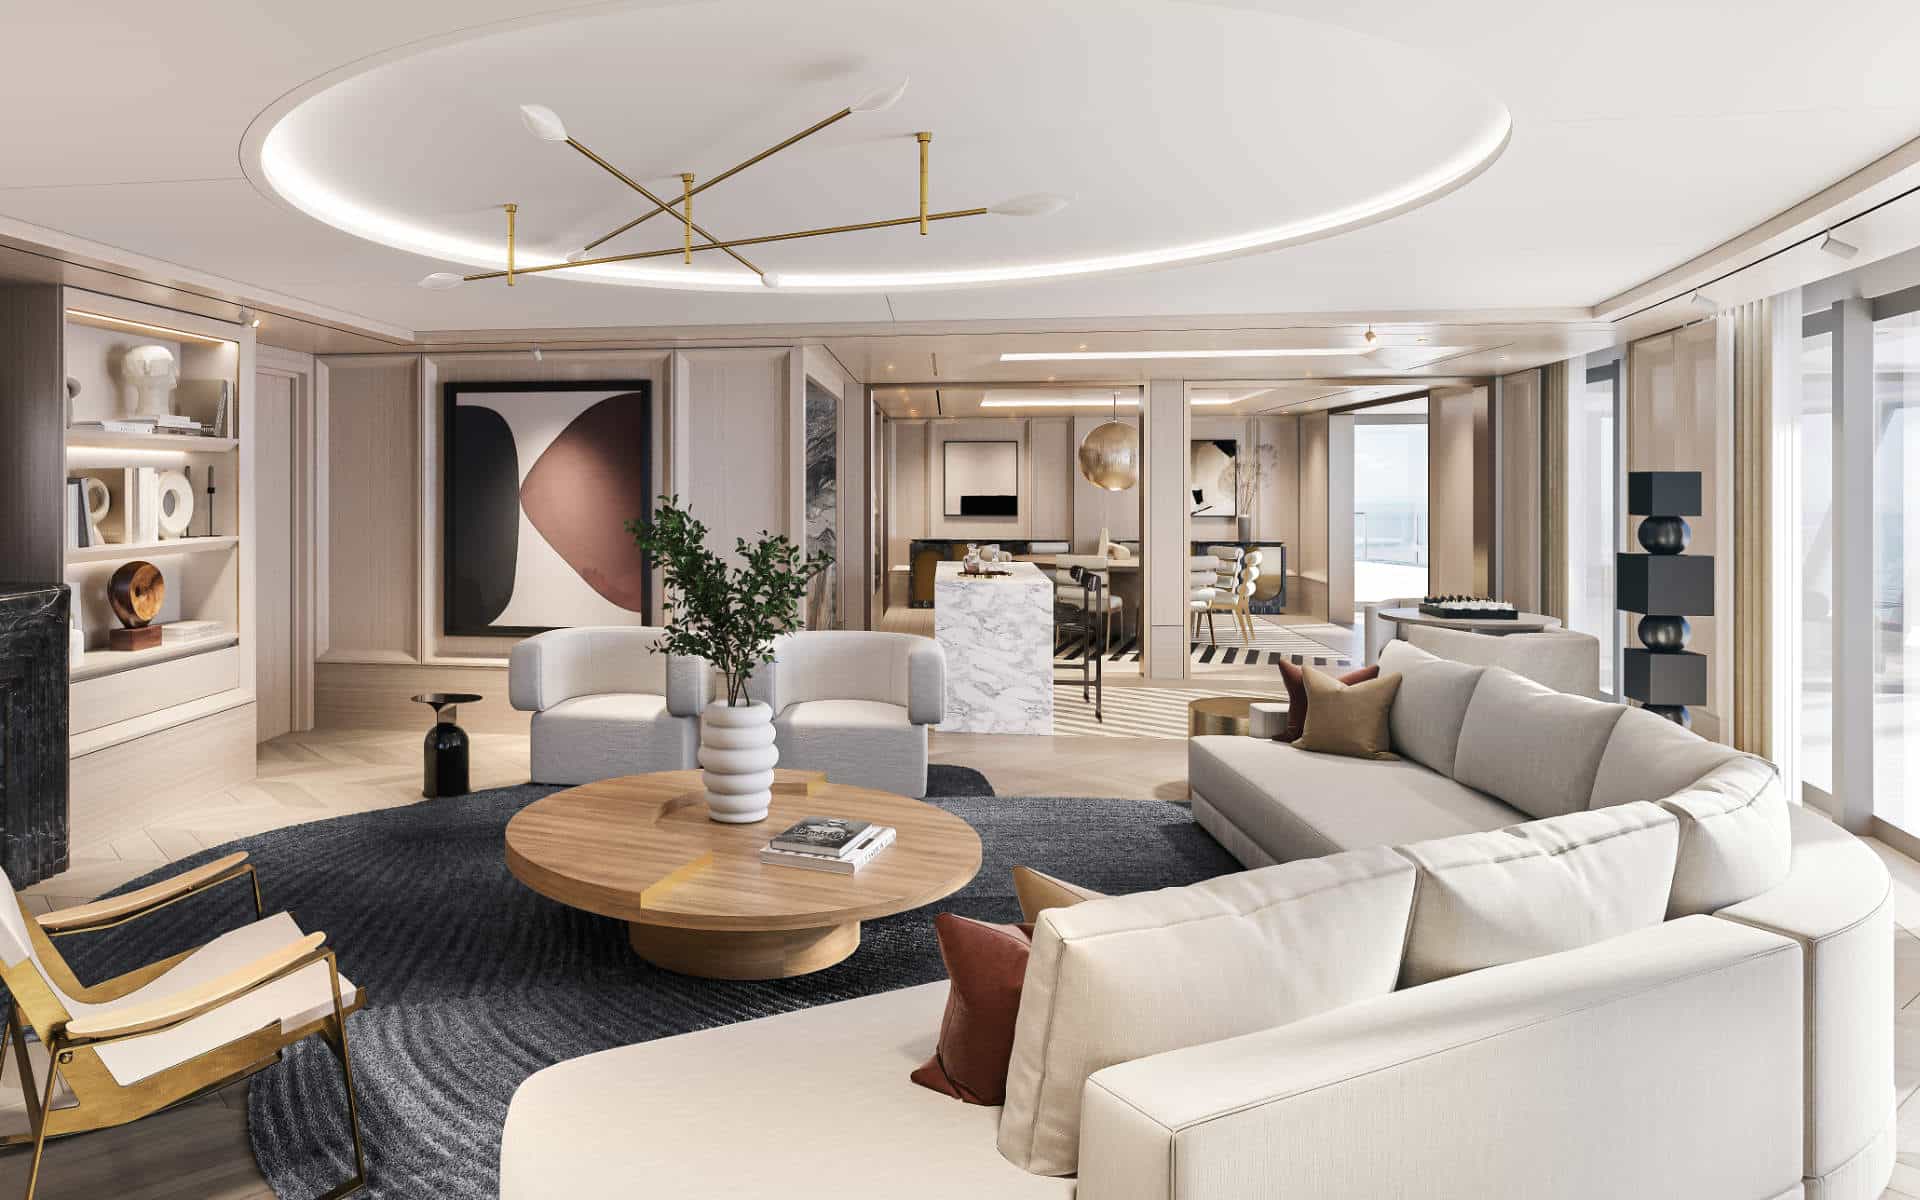 Seven Seas Grandeur Regent Suite living room.